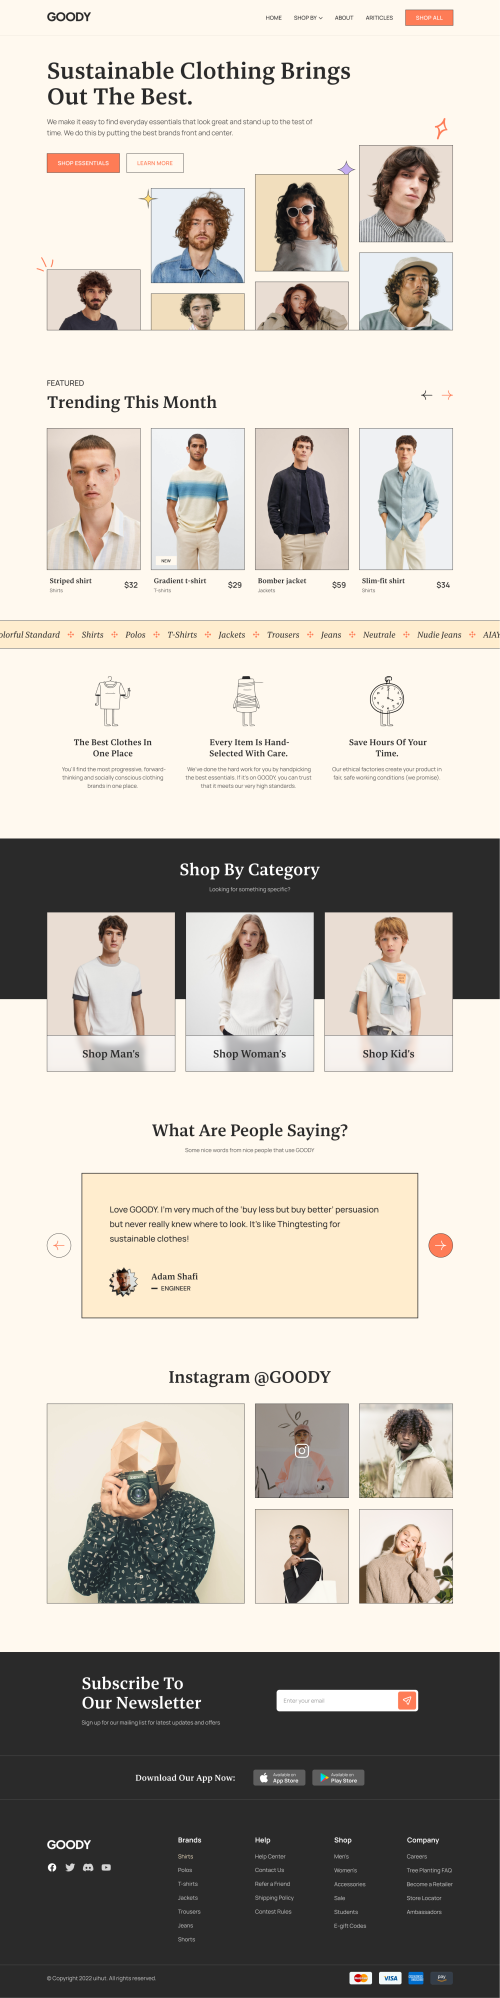 UIHut - Clothing Store Website Design - 20225